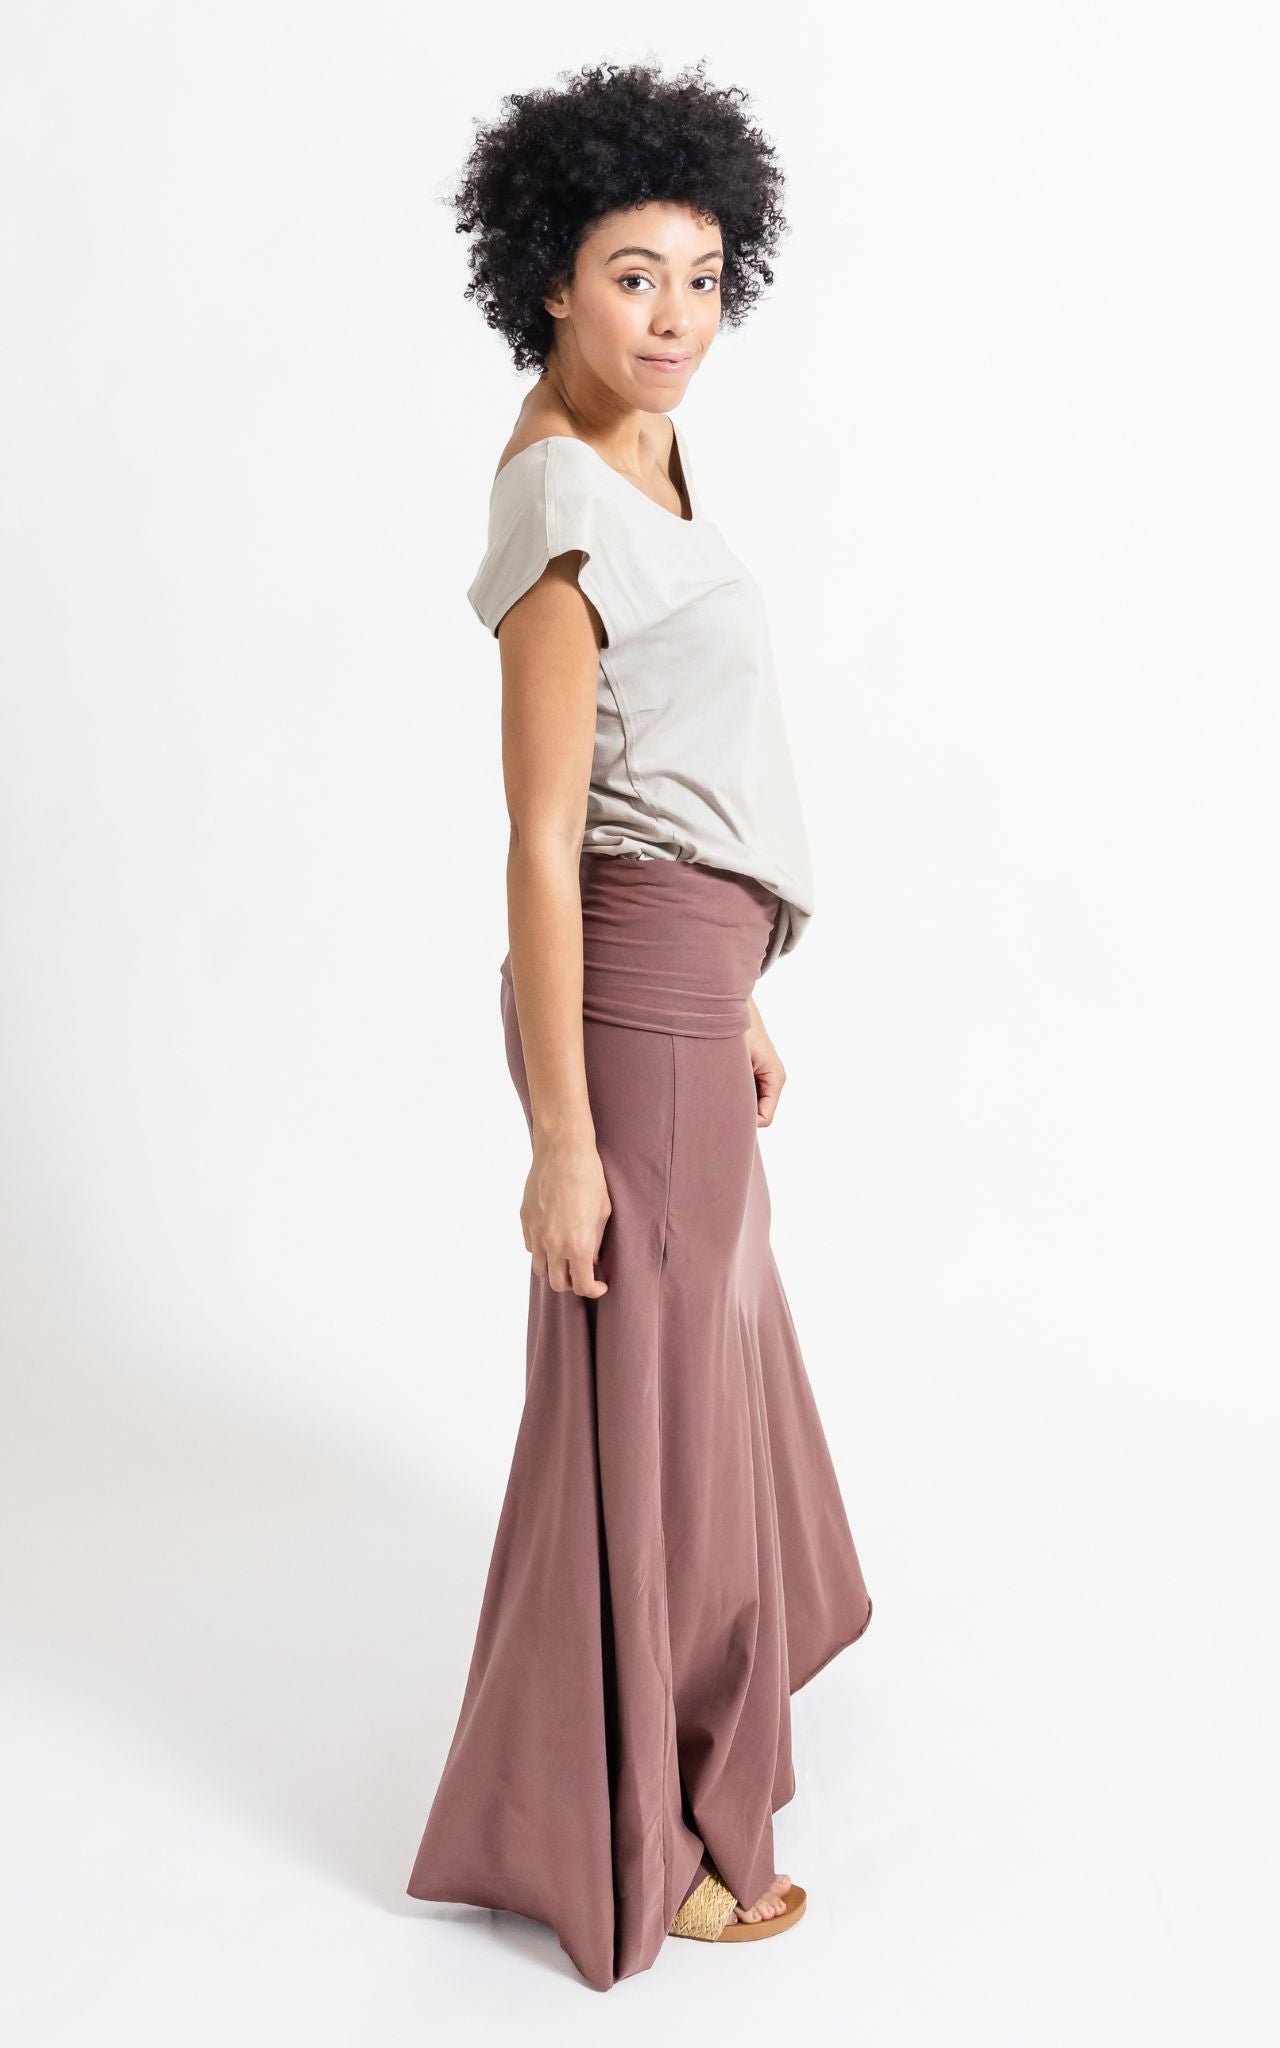 Surya Australia Ethical Organic Cotton Skirt made in Nepal - Dusty Mauve